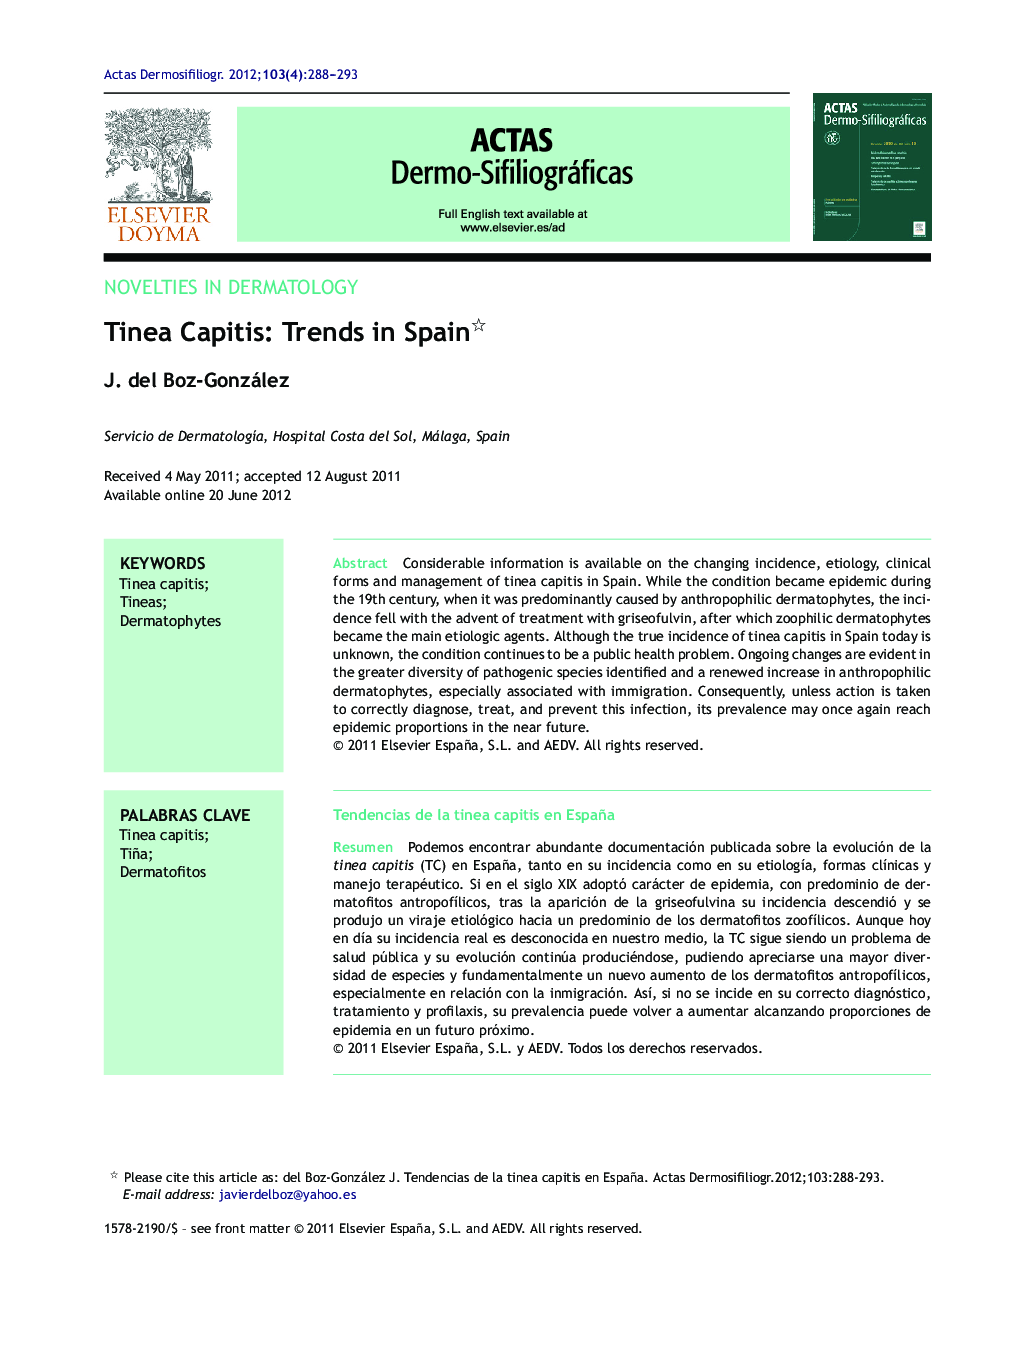 Tinea Capitis: Trends in Spain